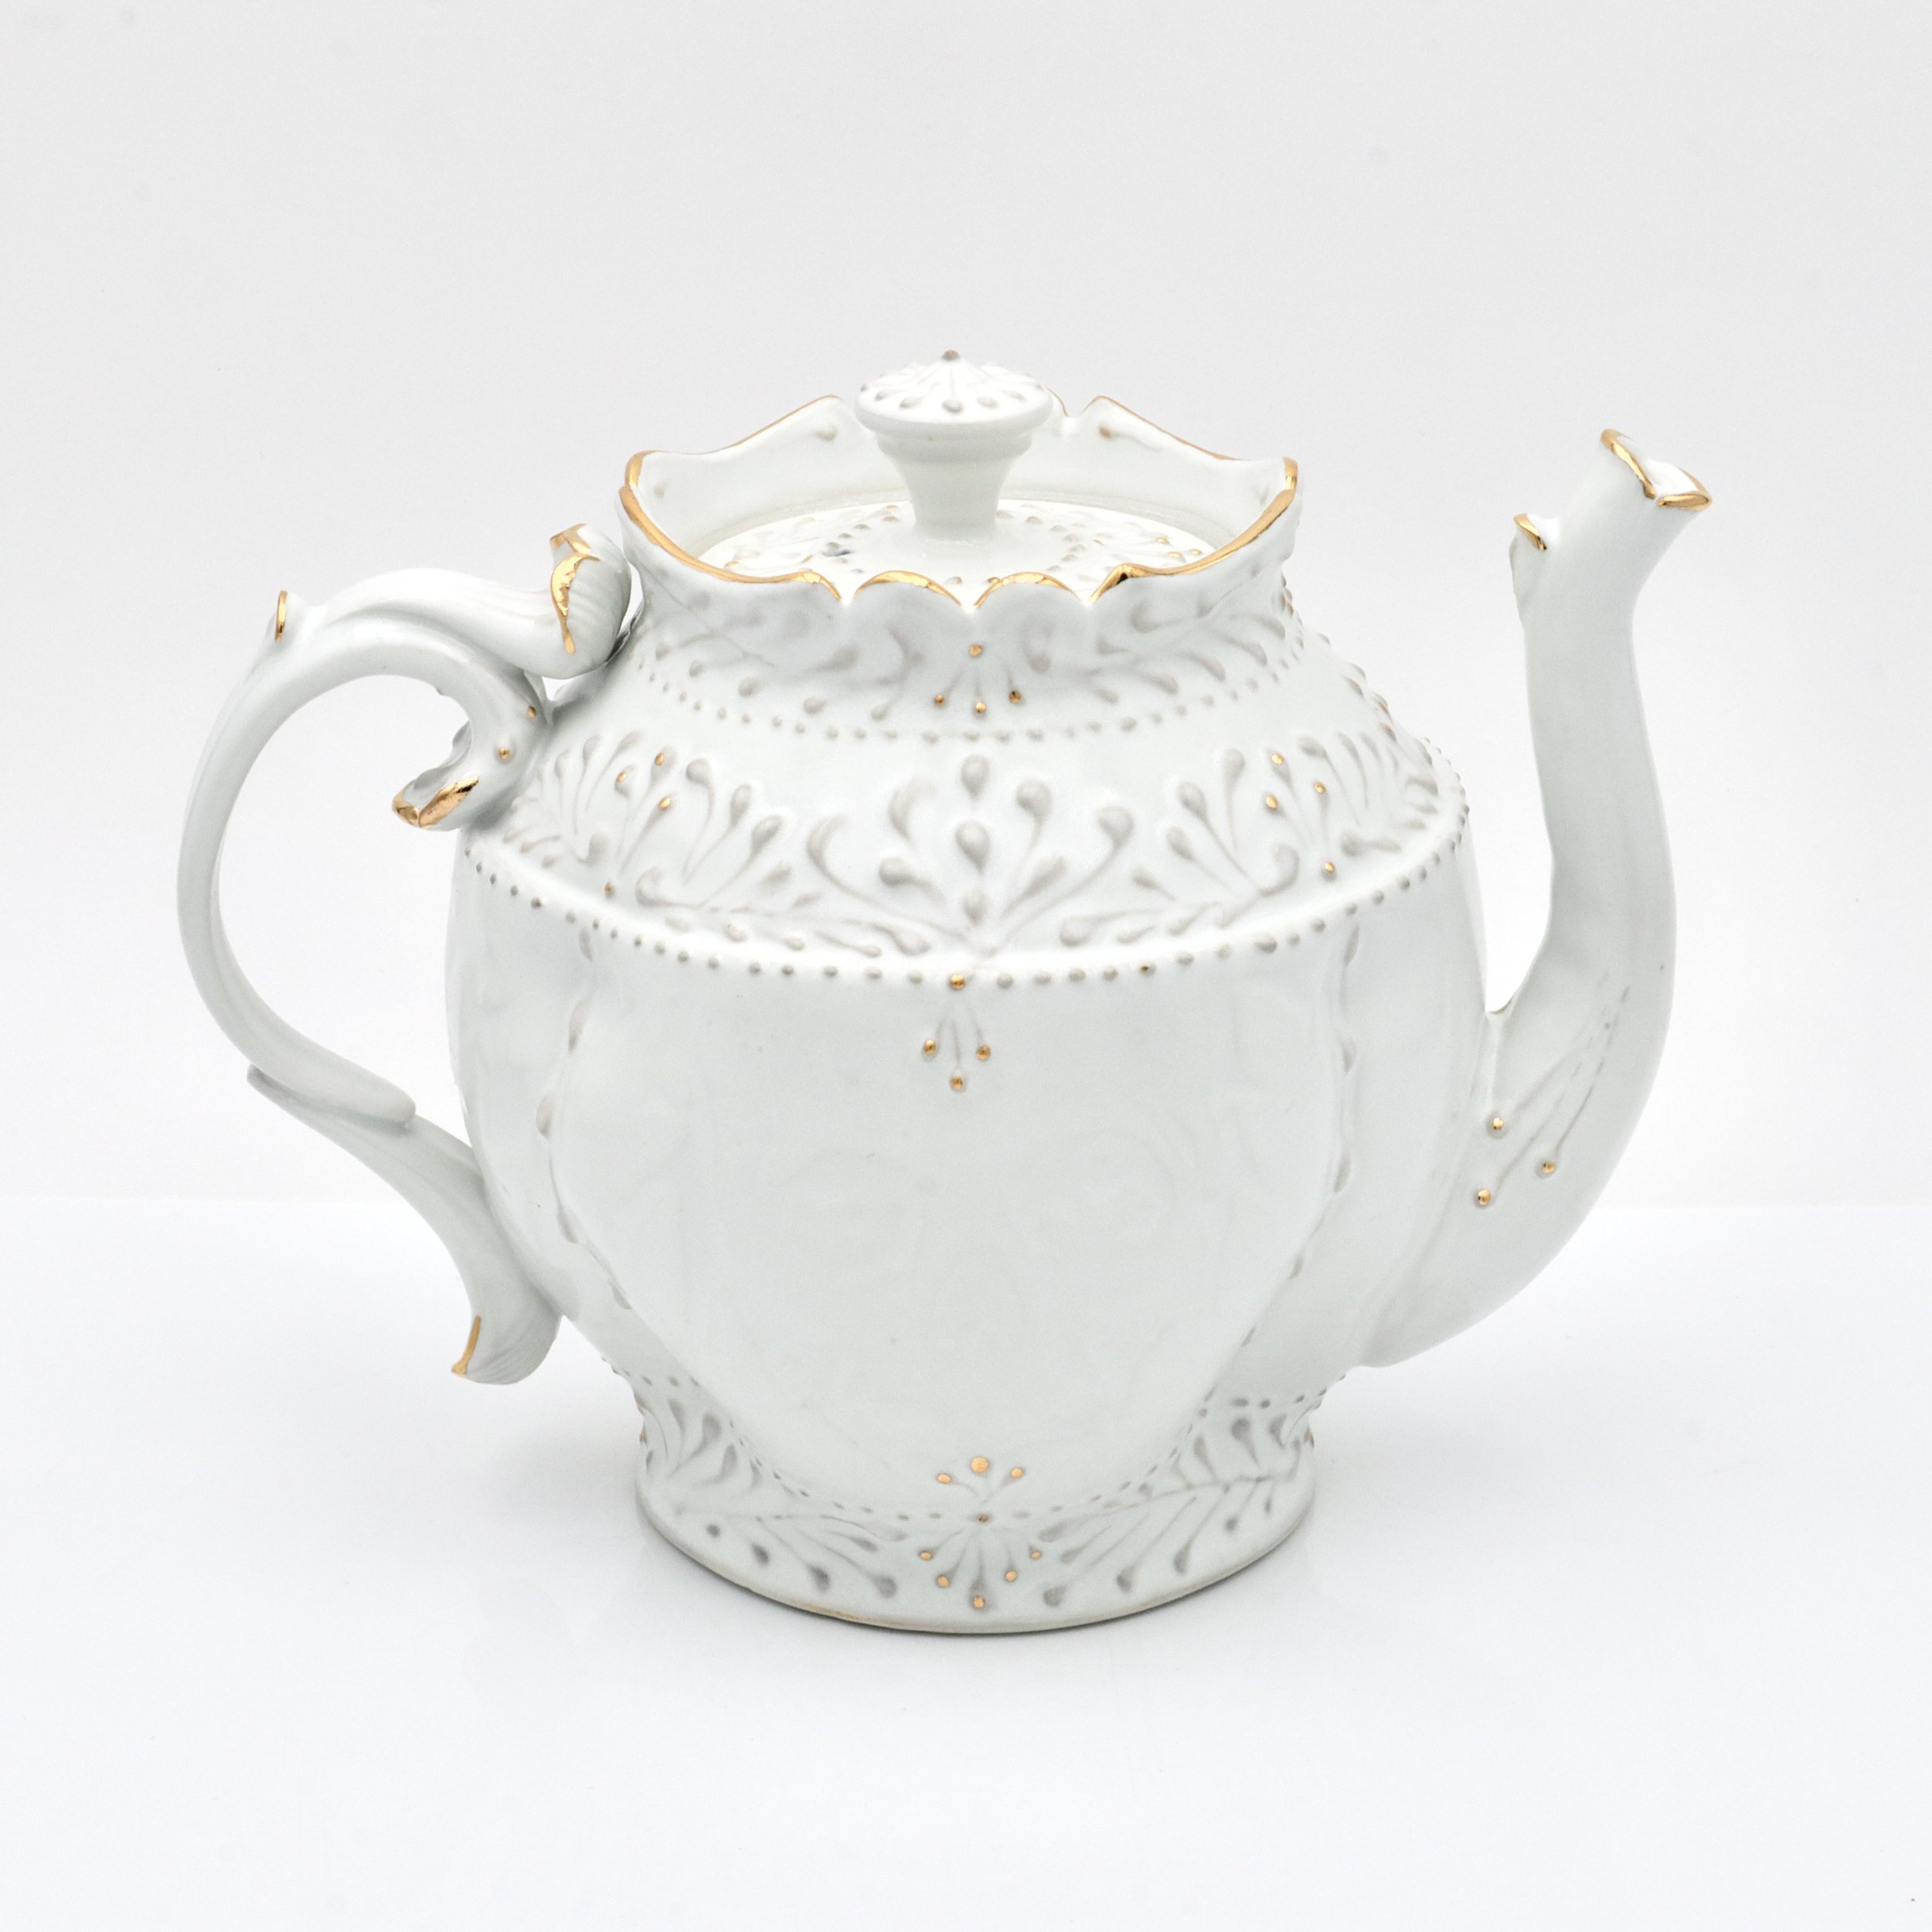  Ceramic teapot by Mike Stumbras